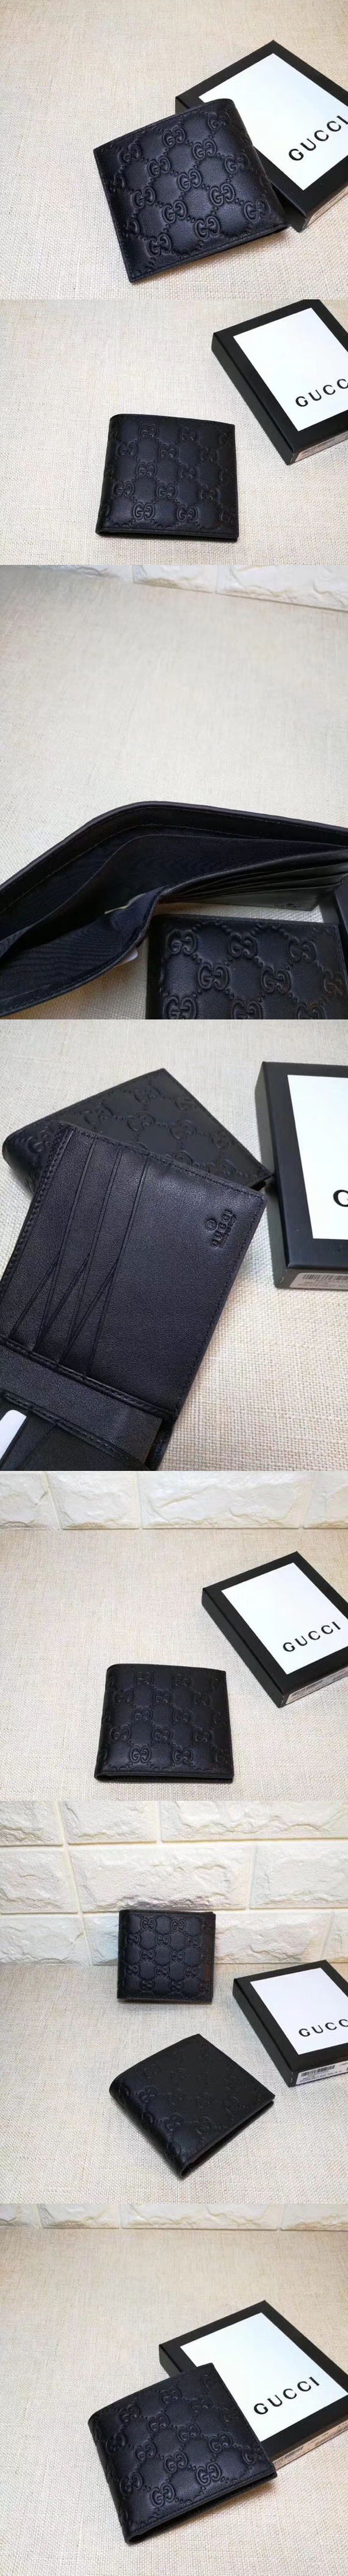 Replica Gucci 145754 Bi-Fold GG Leather Wallet Black